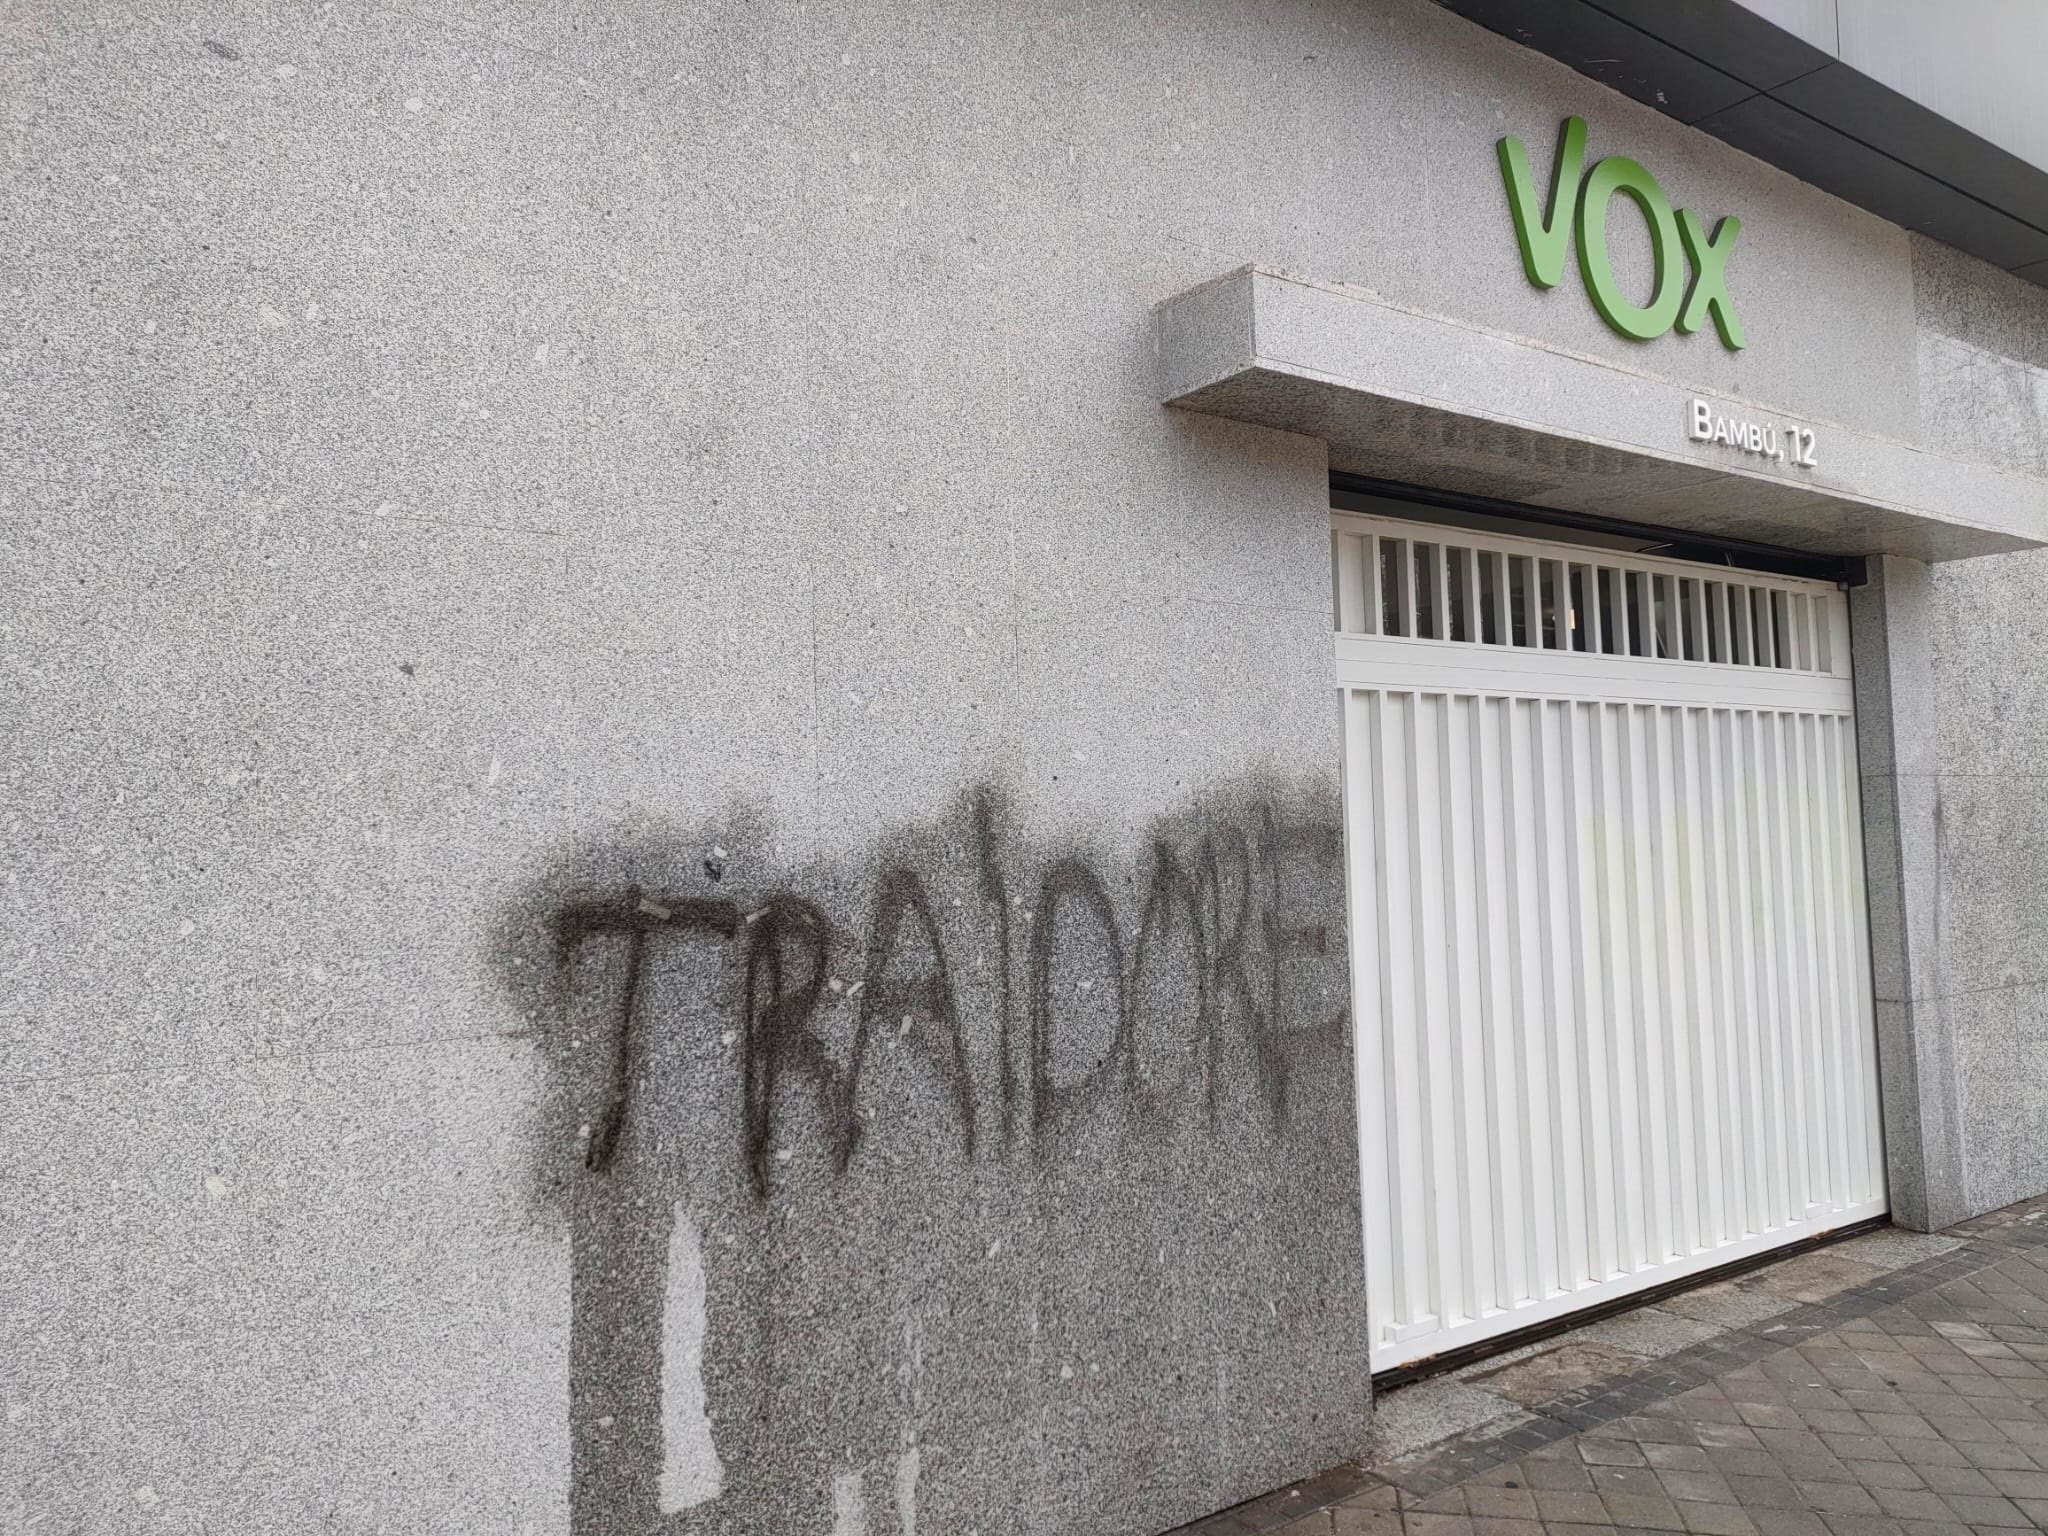 EuropaPress pintada traidores fachada sede vox